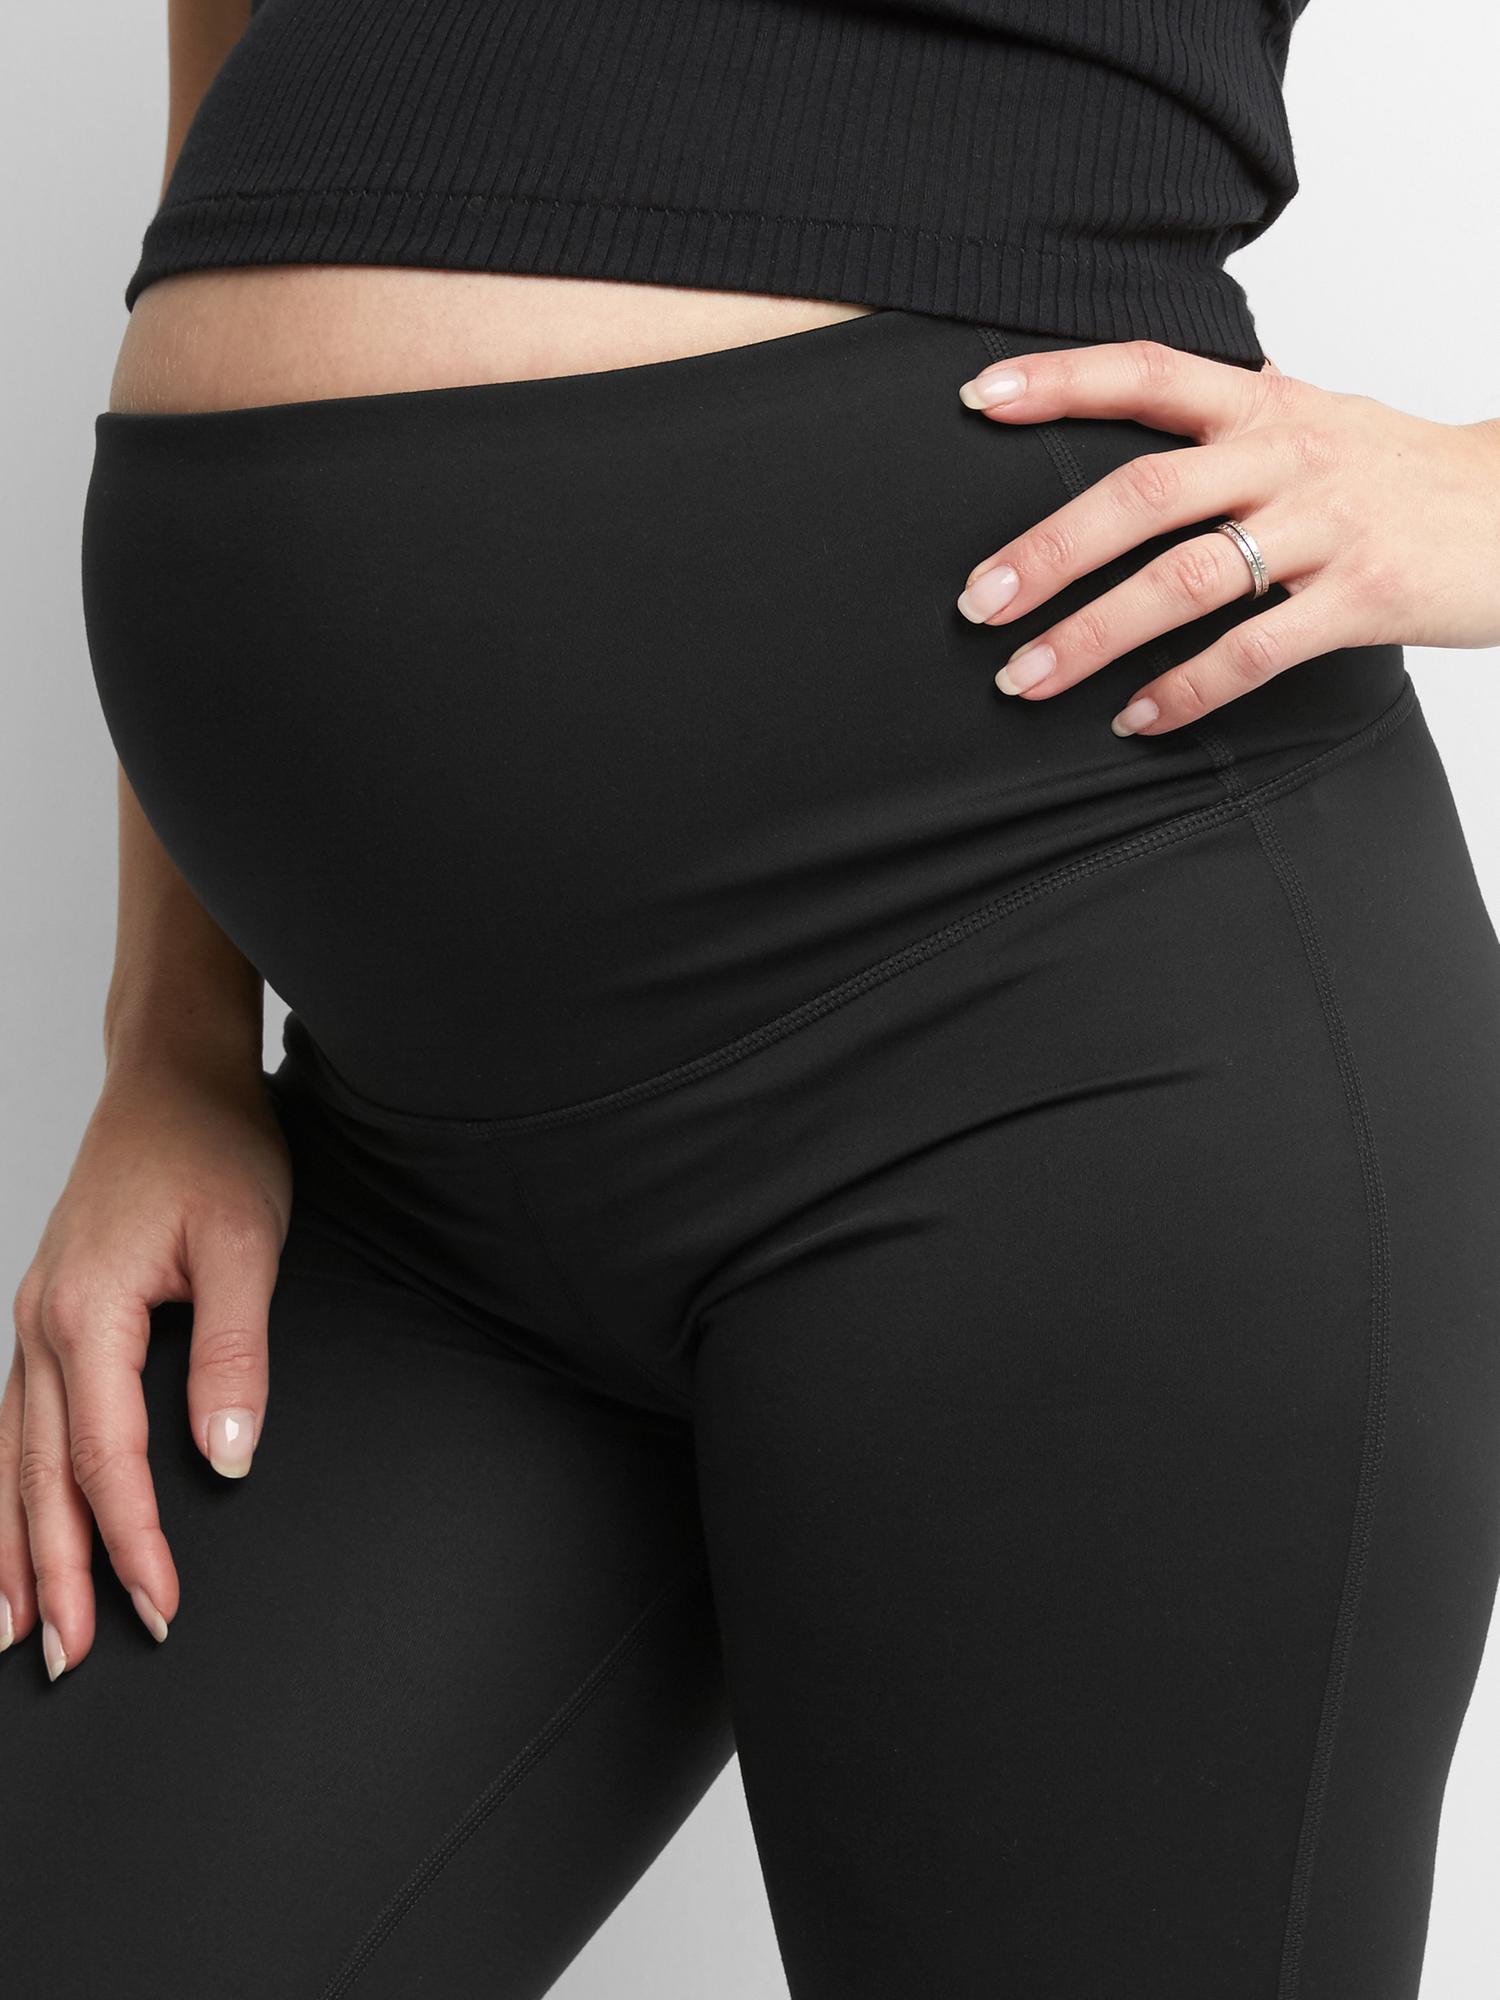 Black GAP Maternity Hip Slug Fit Career Pants (Gently Used - Size 8 Long)